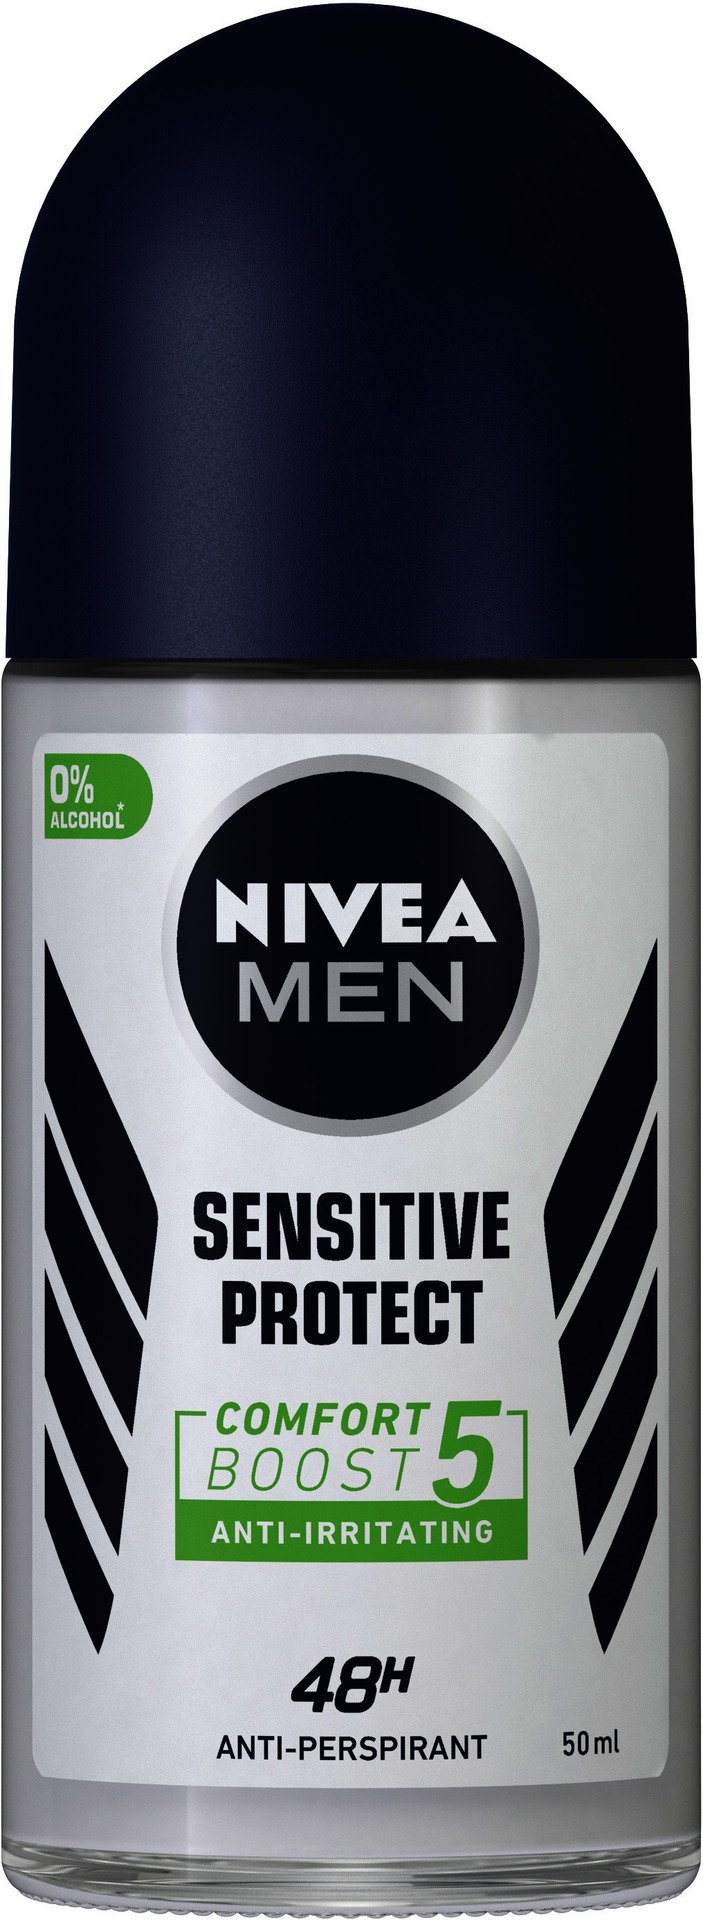 NIVEA MEB Sensitive Protect Comfort Boot Roll On 50 ml